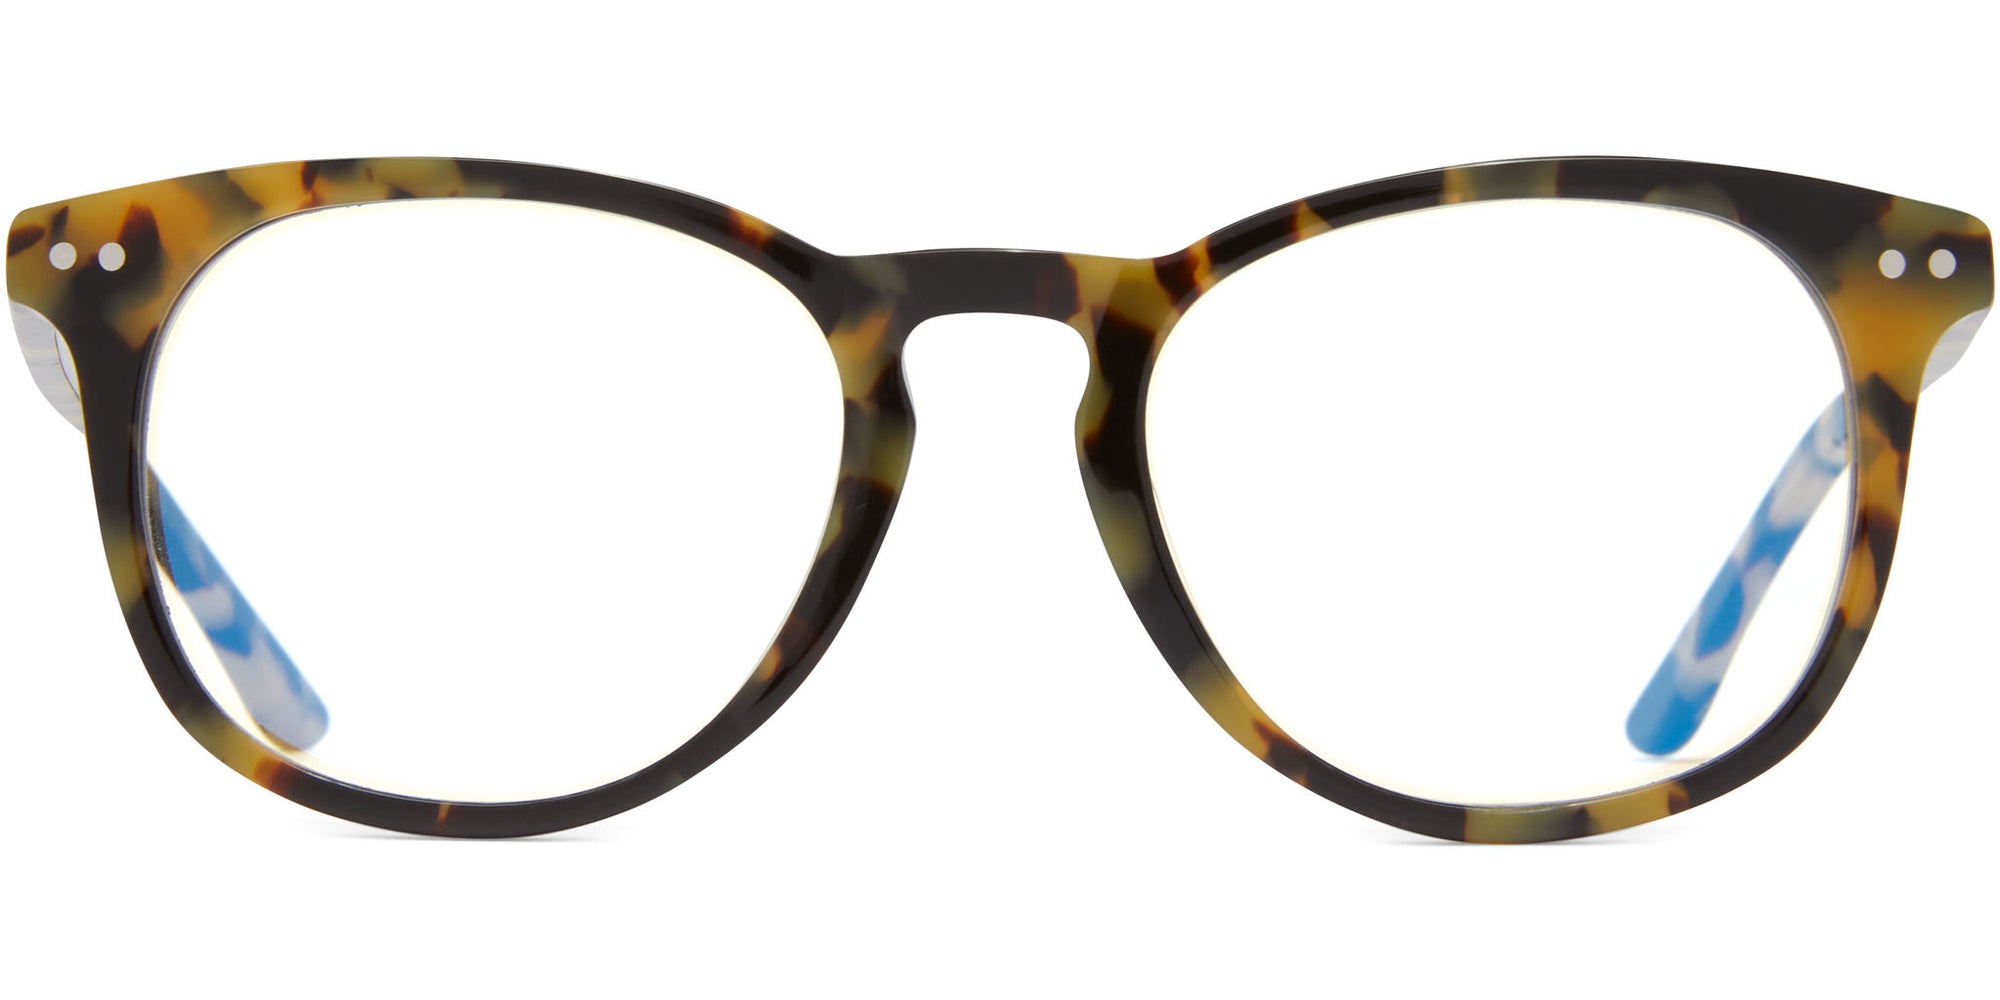 ScreenVisionâ„¢ - ScreenVisionâ„¢ - Pat Blue Light Glasses - Zero  Magnification - ICU Eyewear